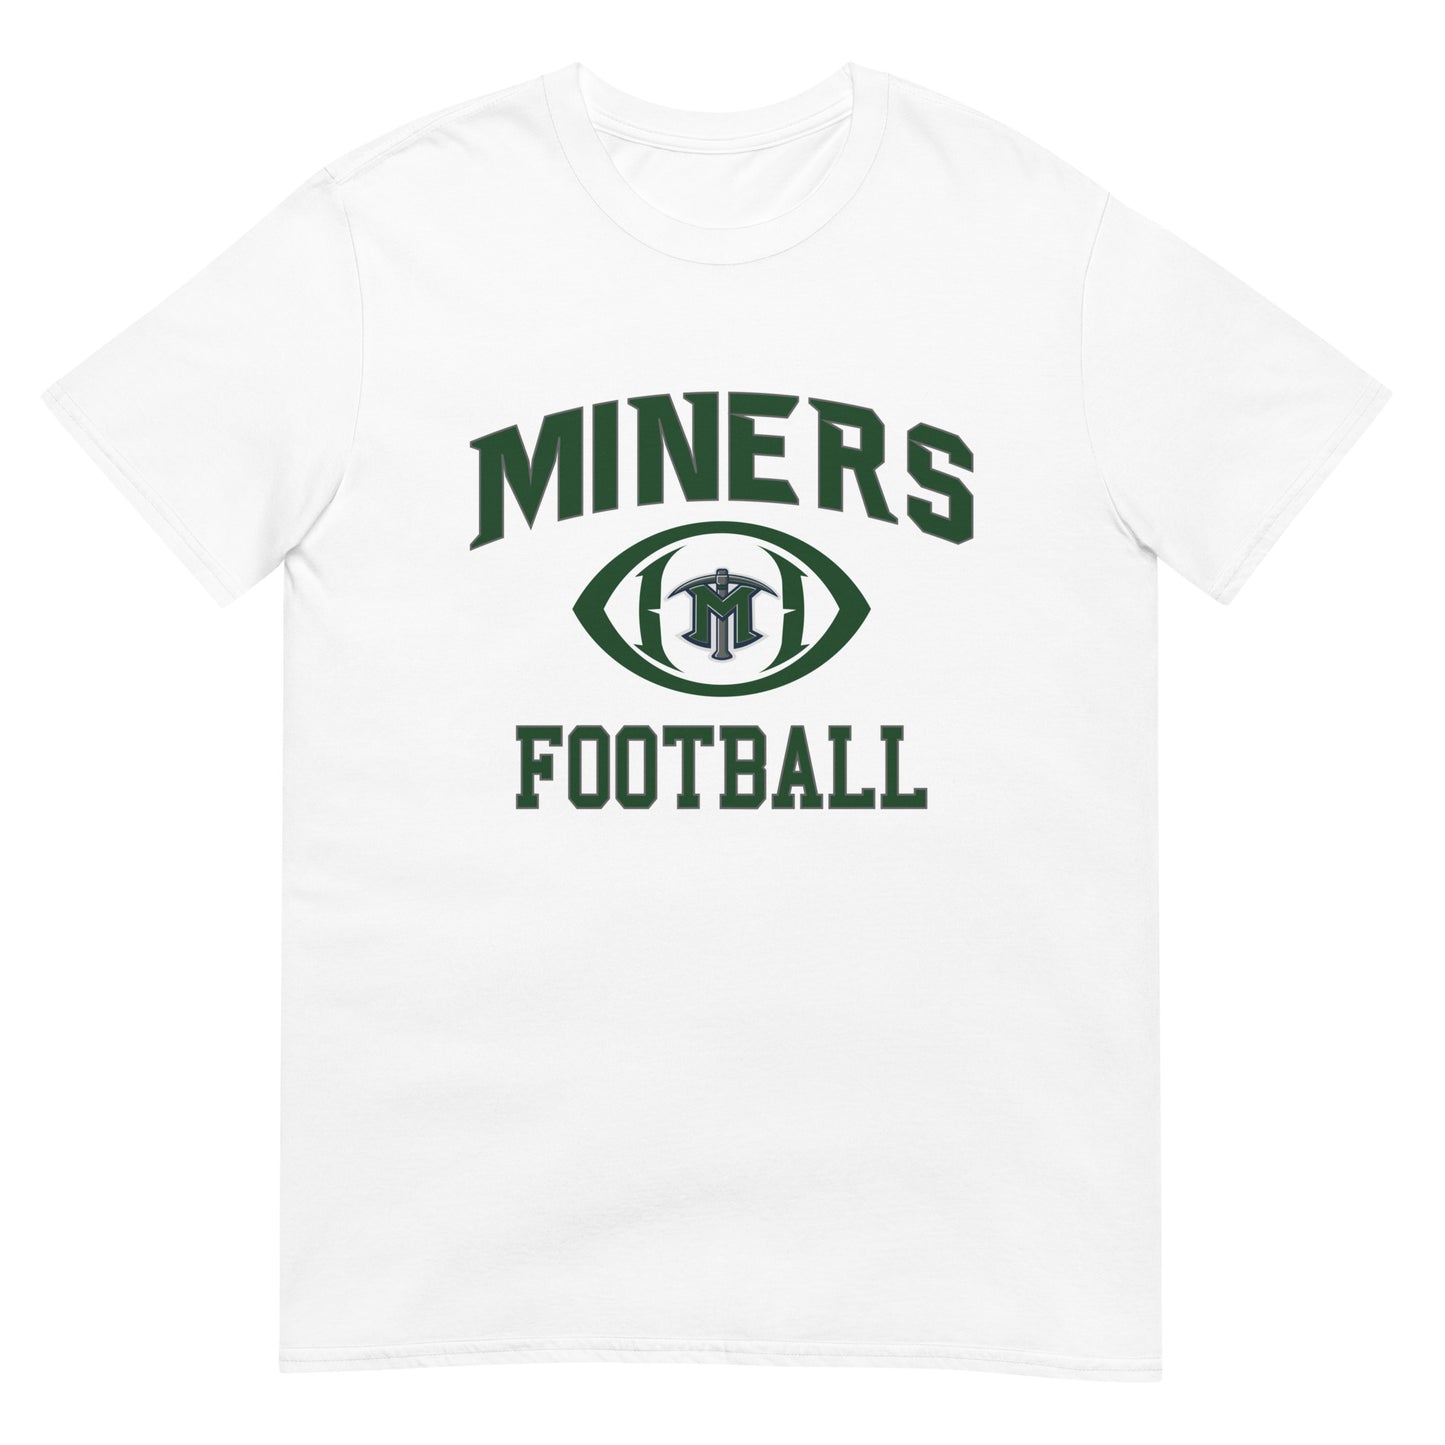 Miners Football Short-Sleeve Unisex T-Shirt